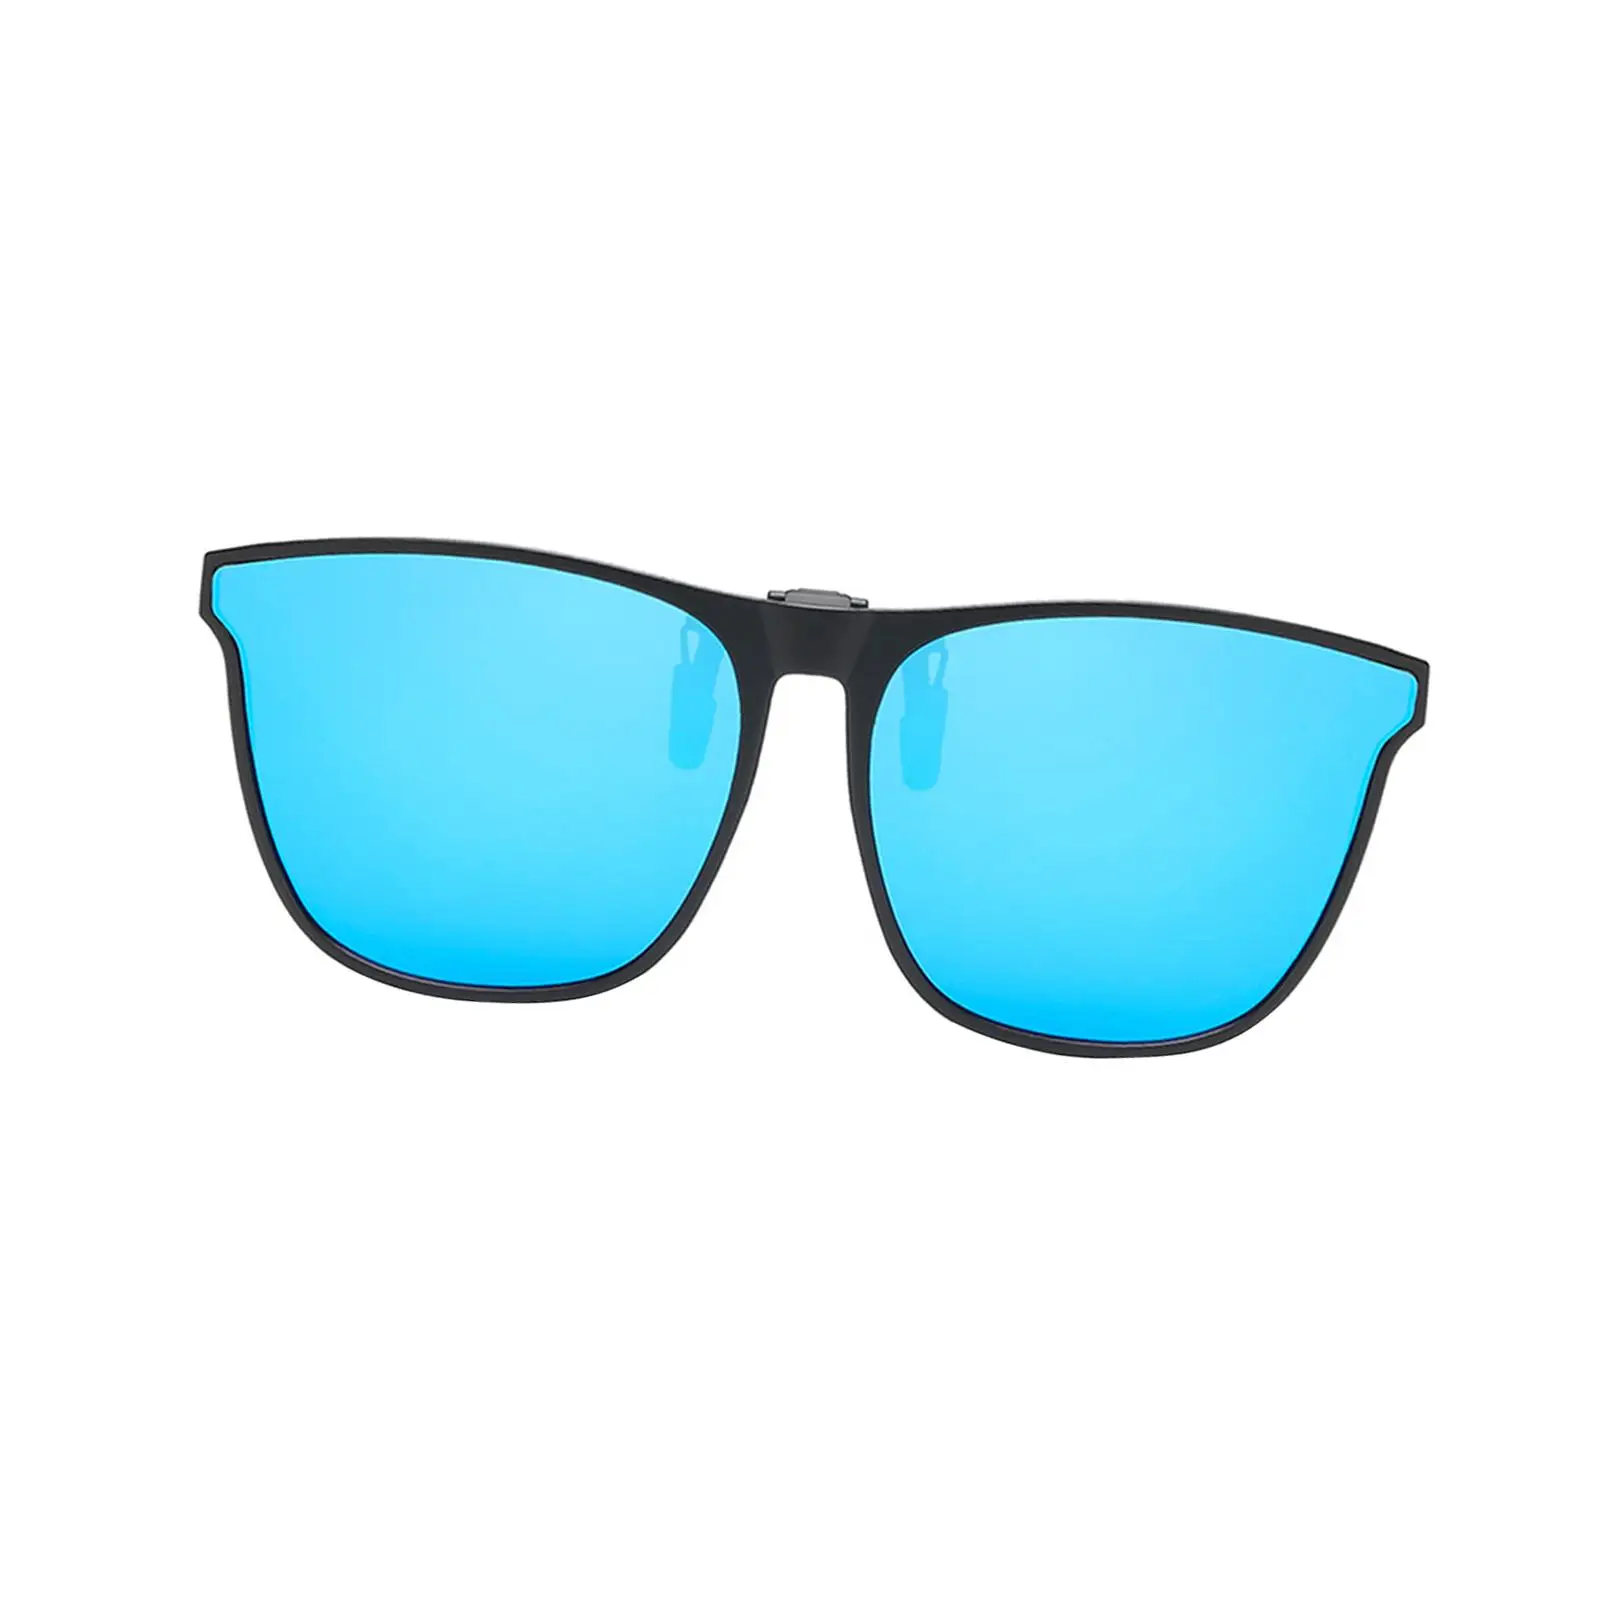 Polarized Clip On Sunglasses Lens Lightweight Eyeglasses Driving Glasses Large Frame Anti Glare for Outdoor Travelling Driving